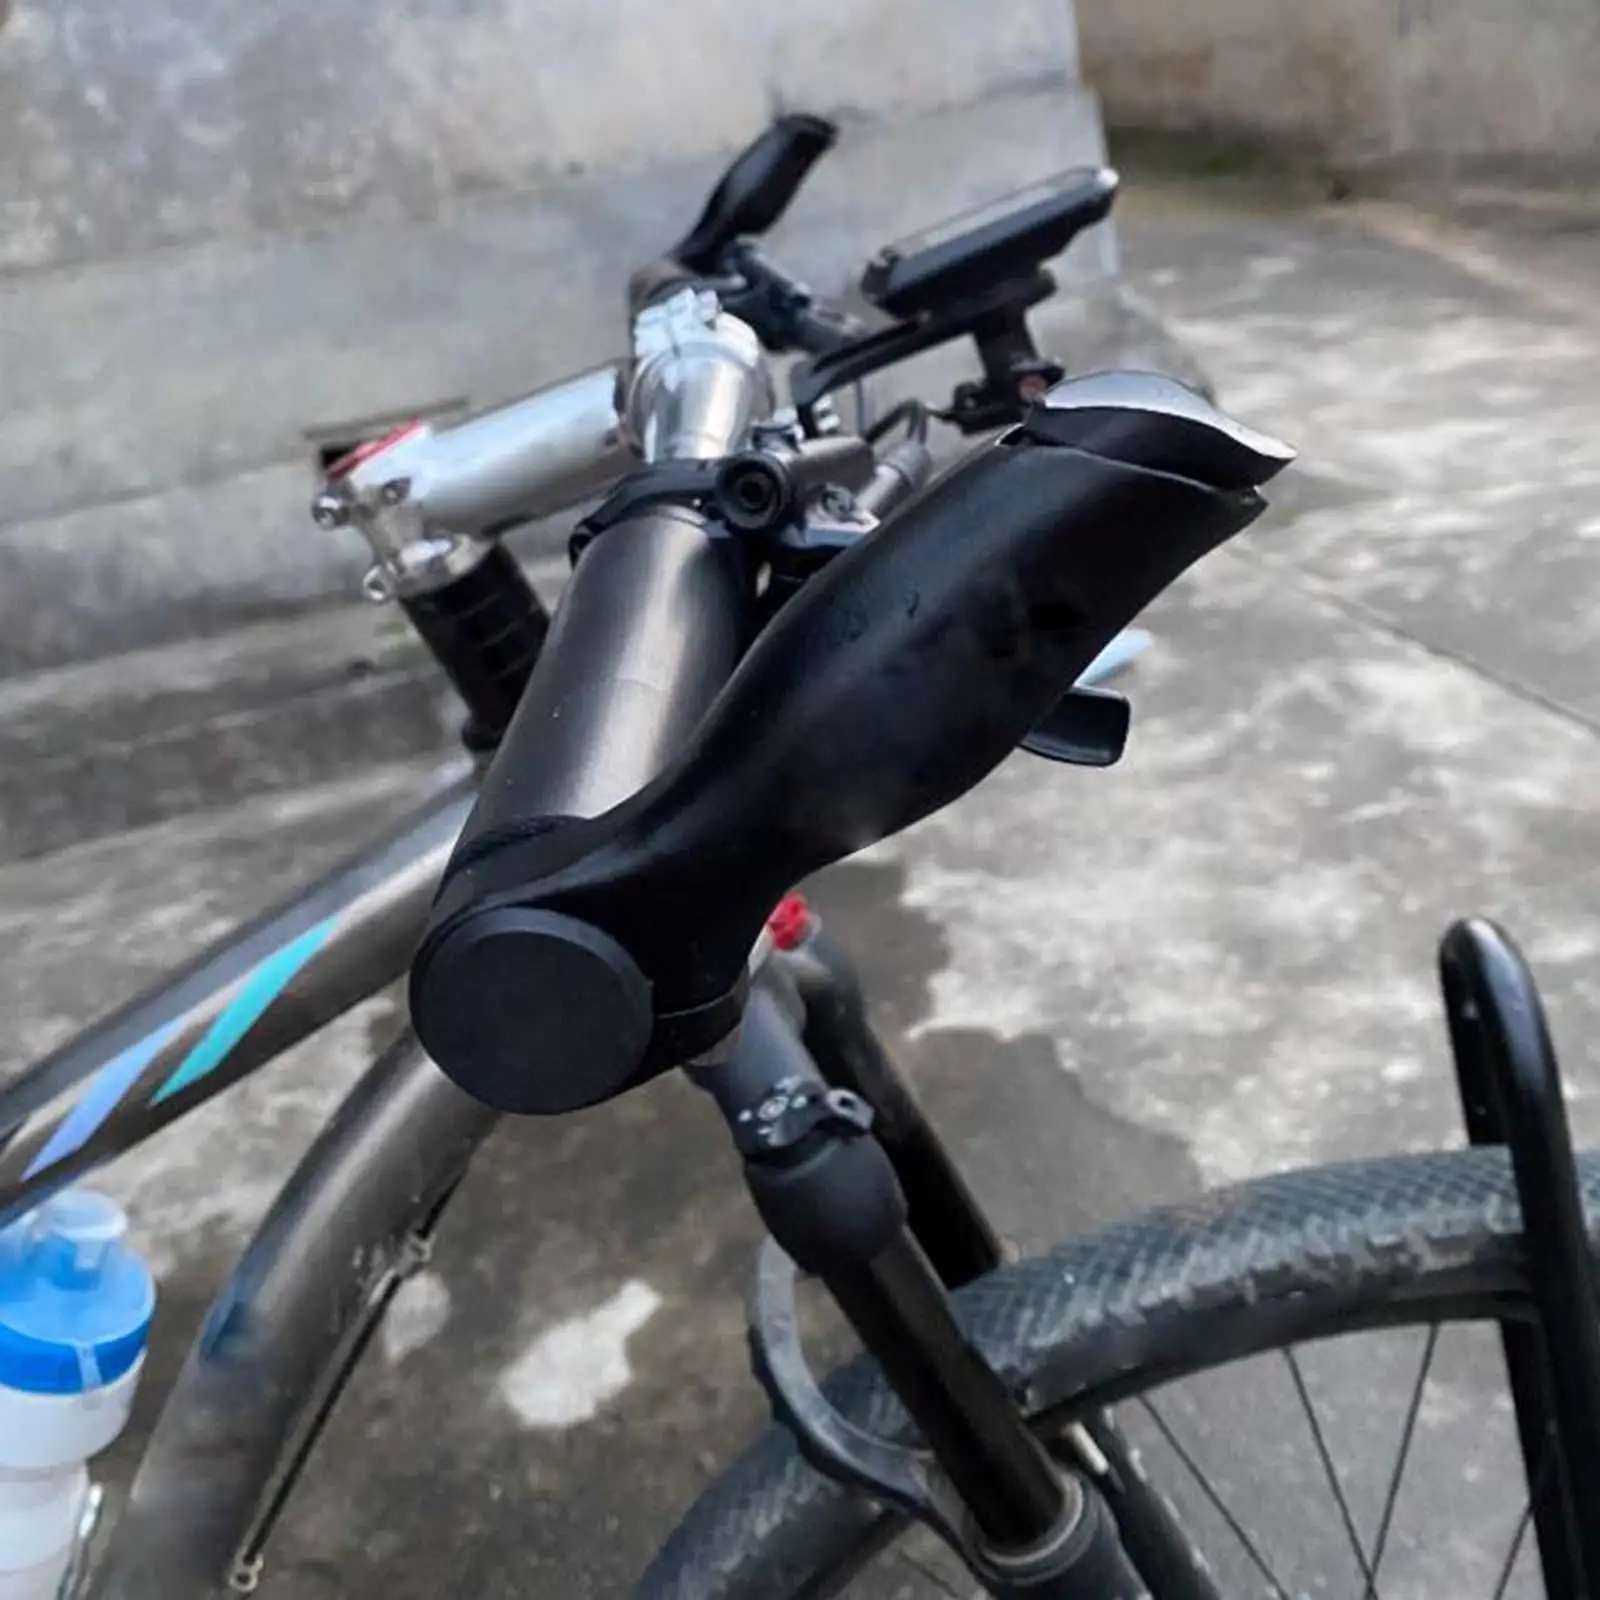 2x Bicycle Handlebar Ends Lightweight Ergonomic Bicycle Handle Bar Ends bike handle bars parts replacement repair